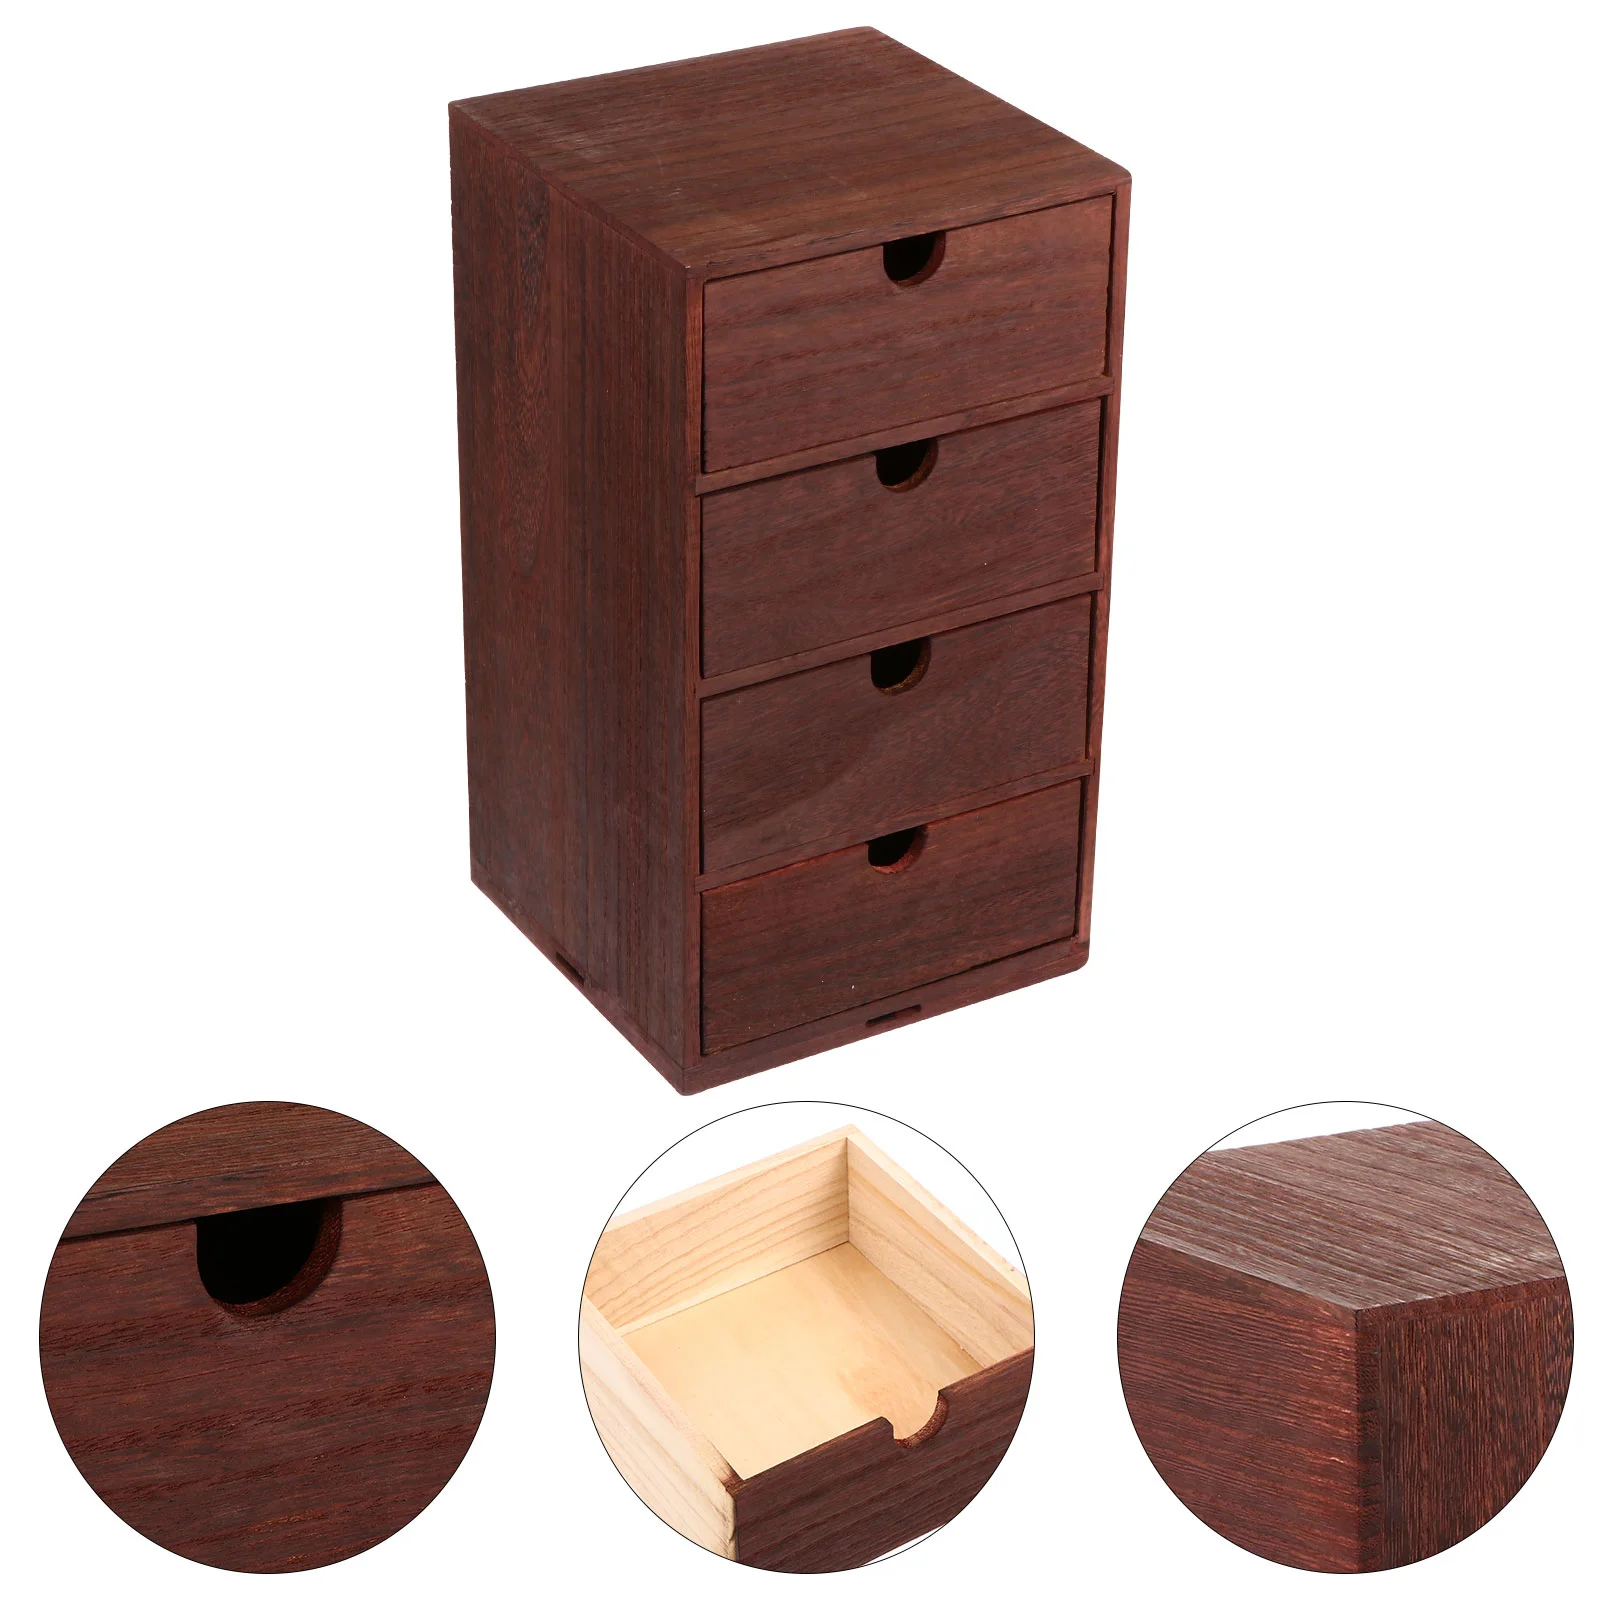 Wooden Storage Box Desktop Drawer Organizer Wood Outdoor Bins Crates Tabletop Cabinet Desk Mini Dresser Cube Boxes Drawers